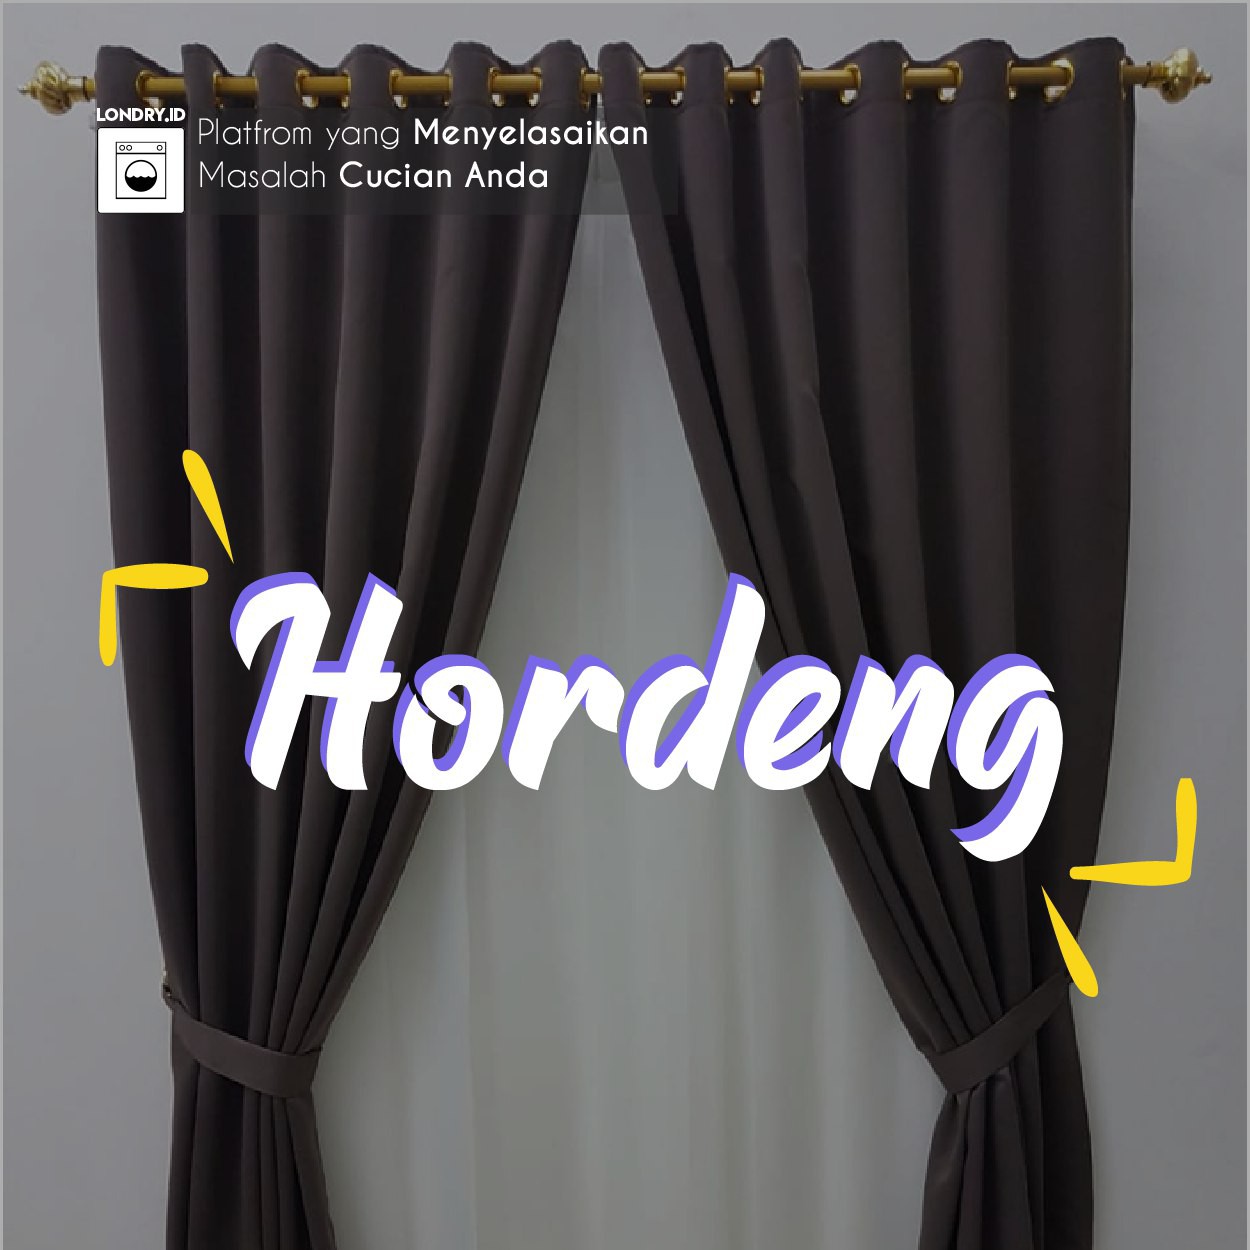 Londry Hordeng